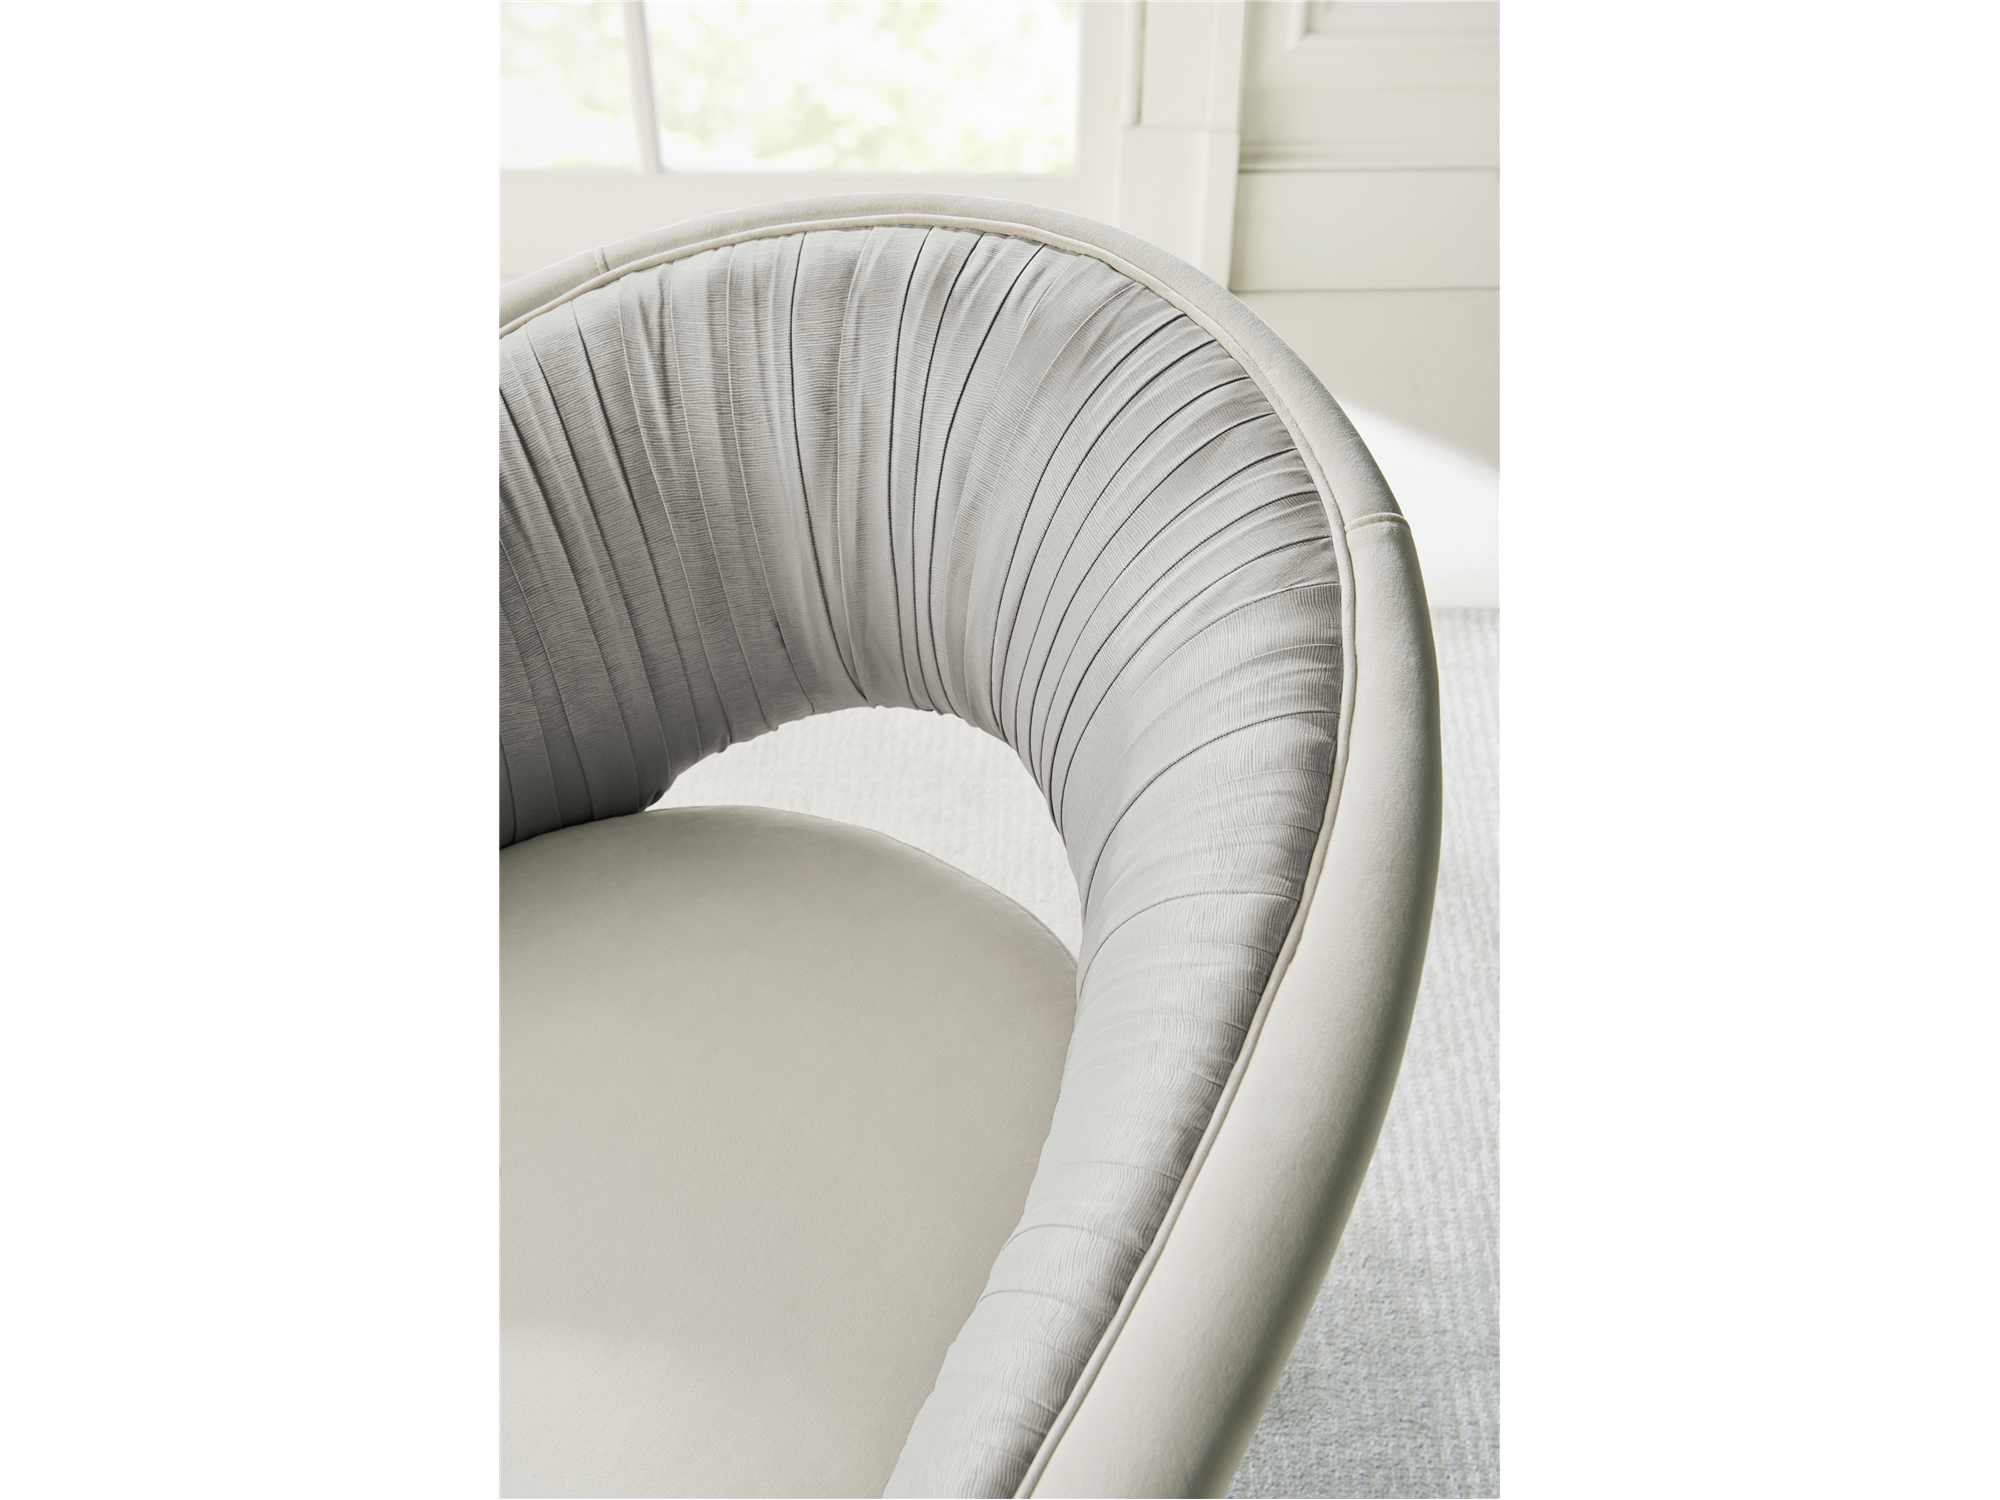 Desmond A Com-Pleat Turn Around Chair in Soft Silver - Euro Living Furniture